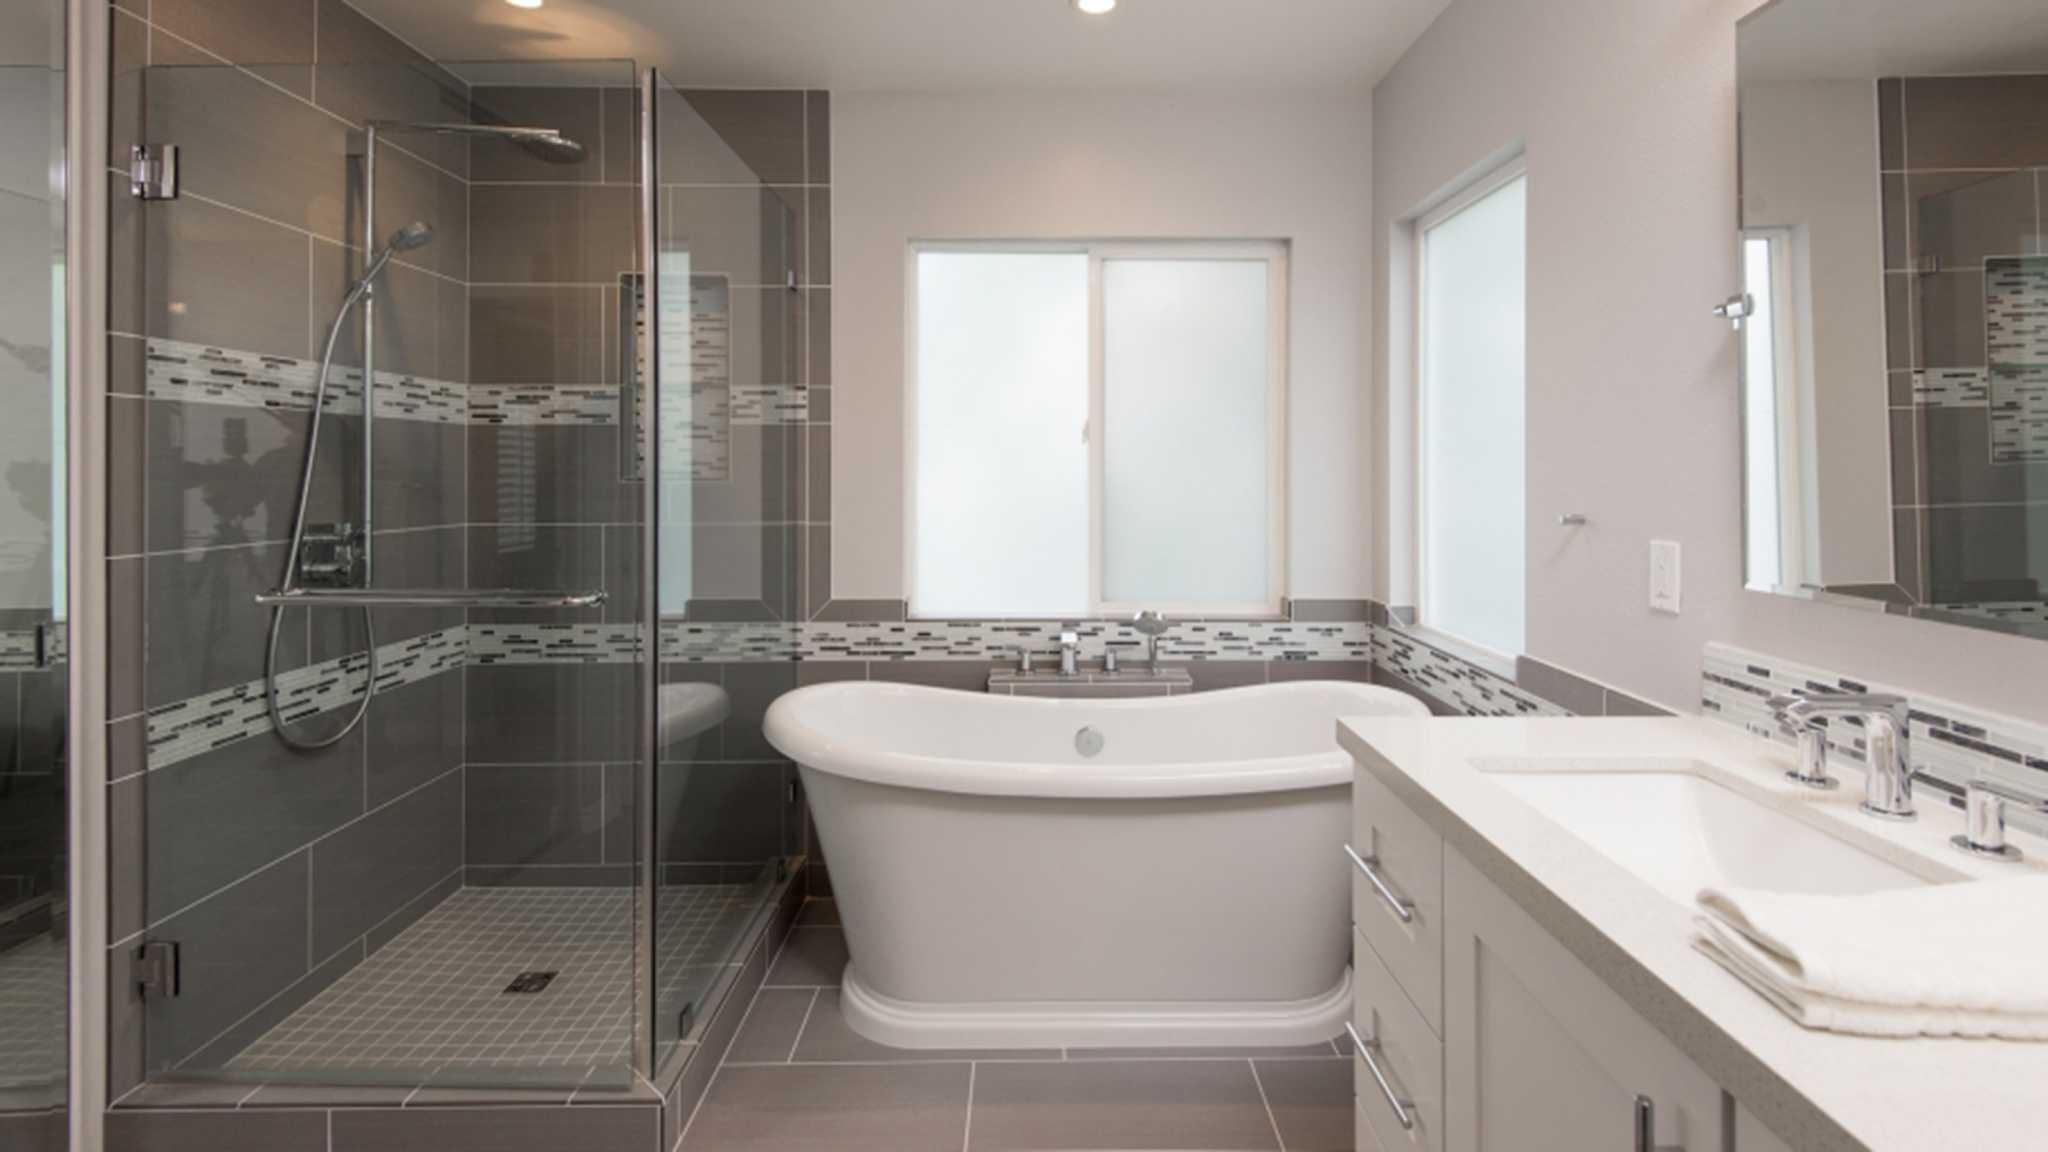 Bathroom Shower Installation
 Living Smart How much does bathroom tile installation